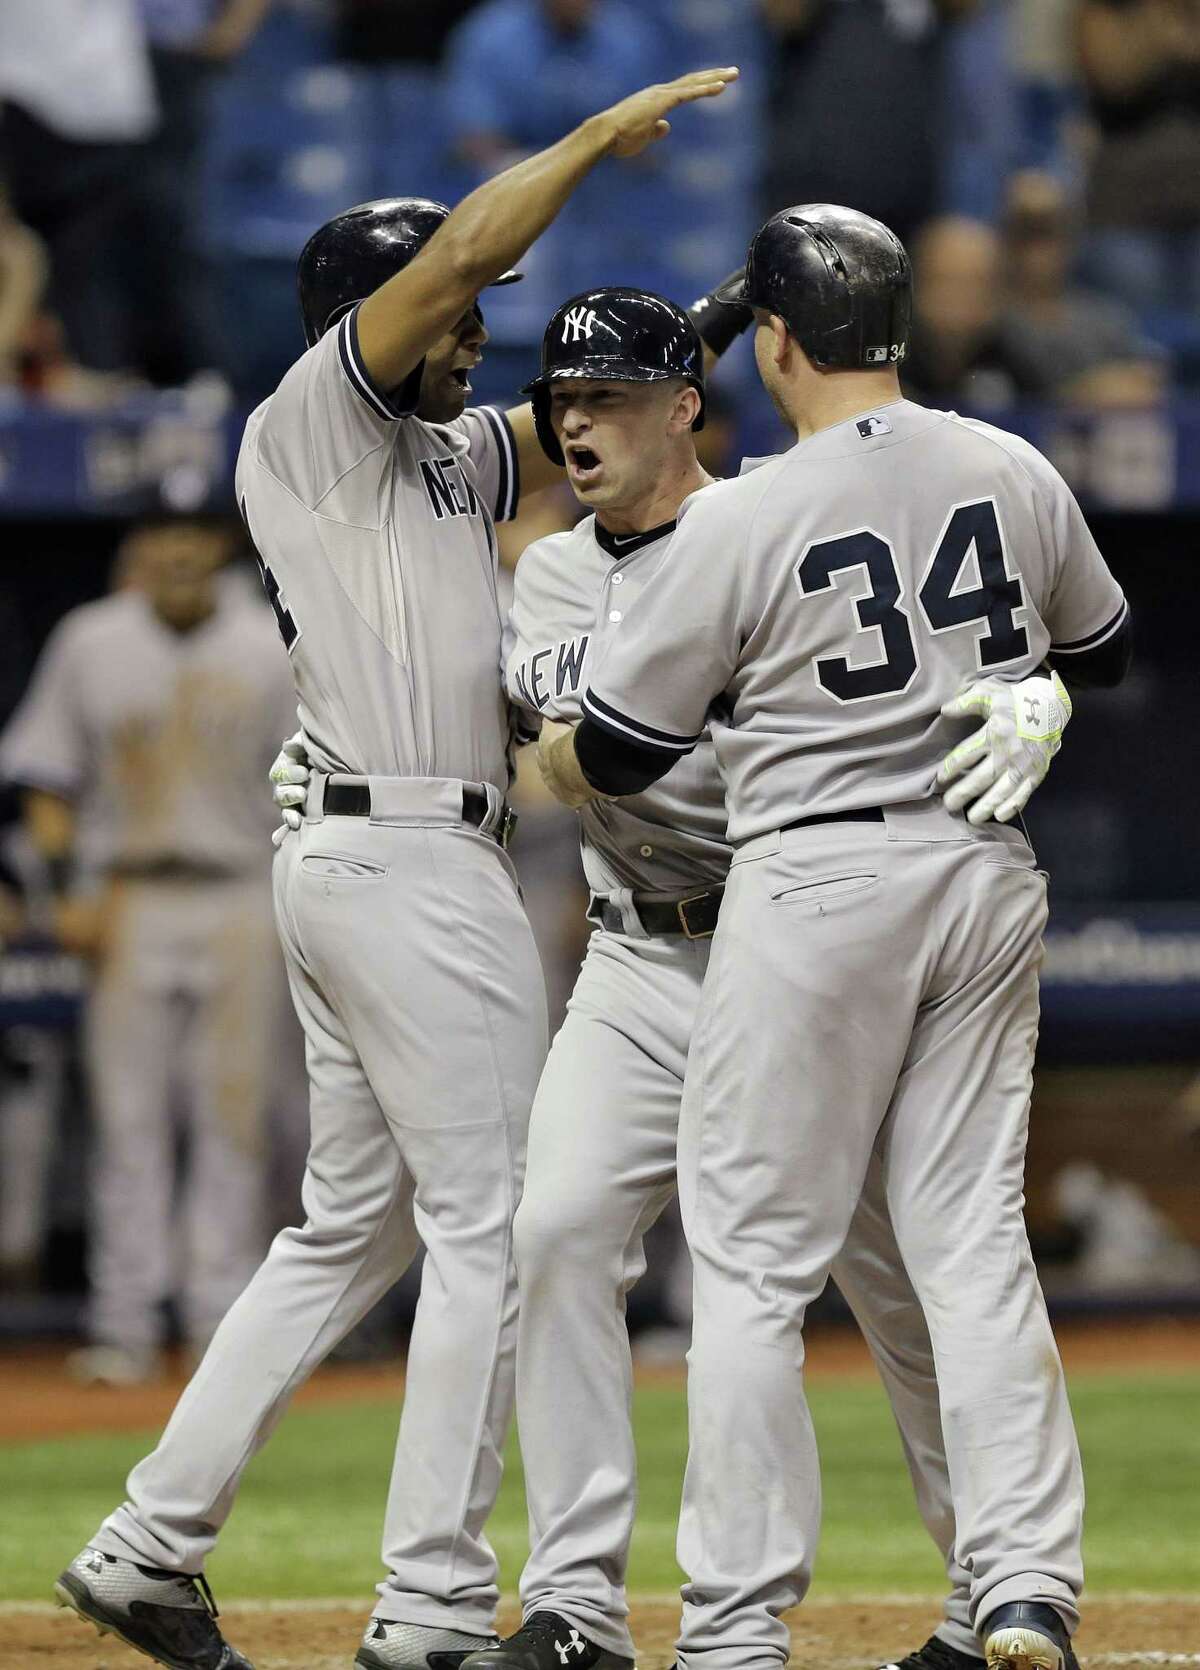 The Yankees’ Slade Heathcott, center, celebrates his three-run home run in the ninth inning on Monday.